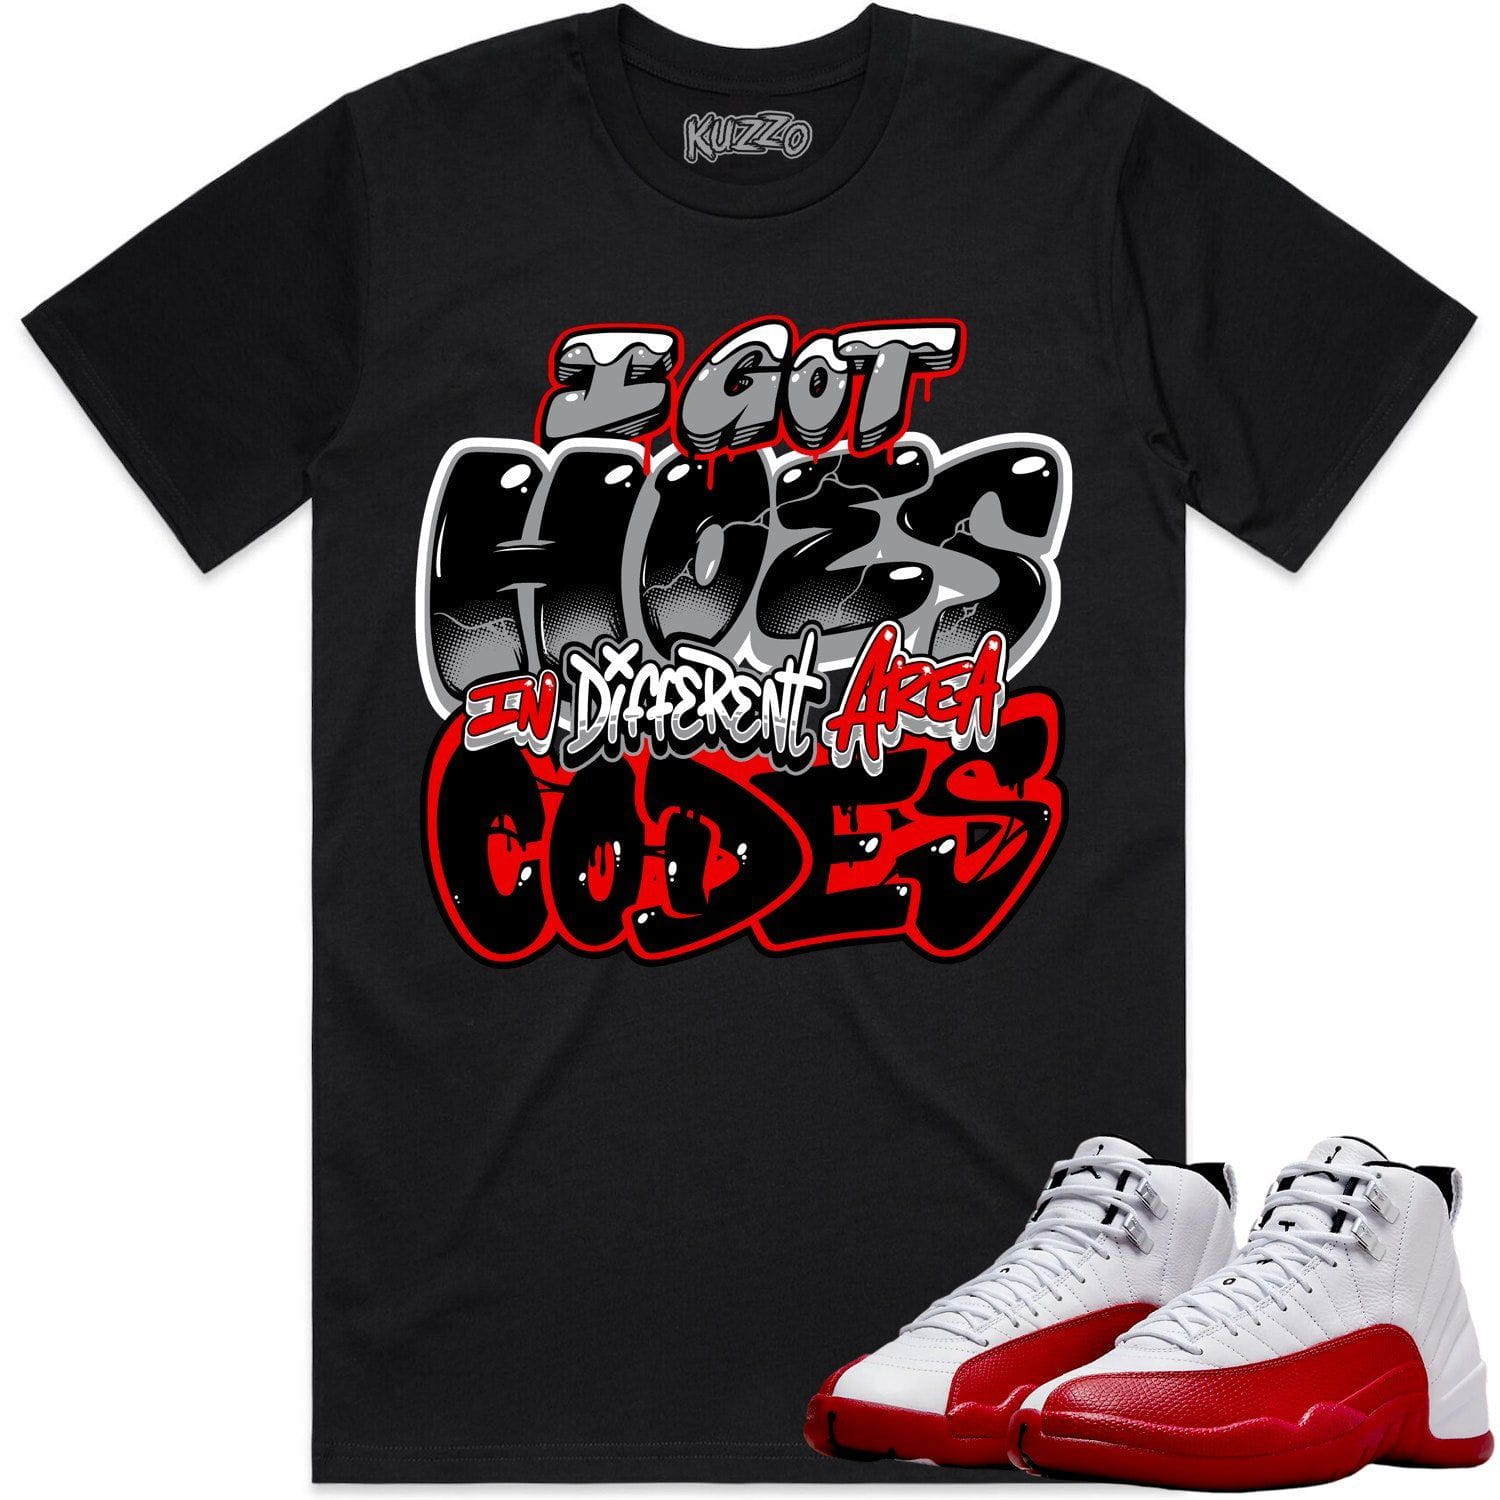 Cherry 12s Shirt - Jordan Retro 12 Cherry Shirts - Red Area Codes